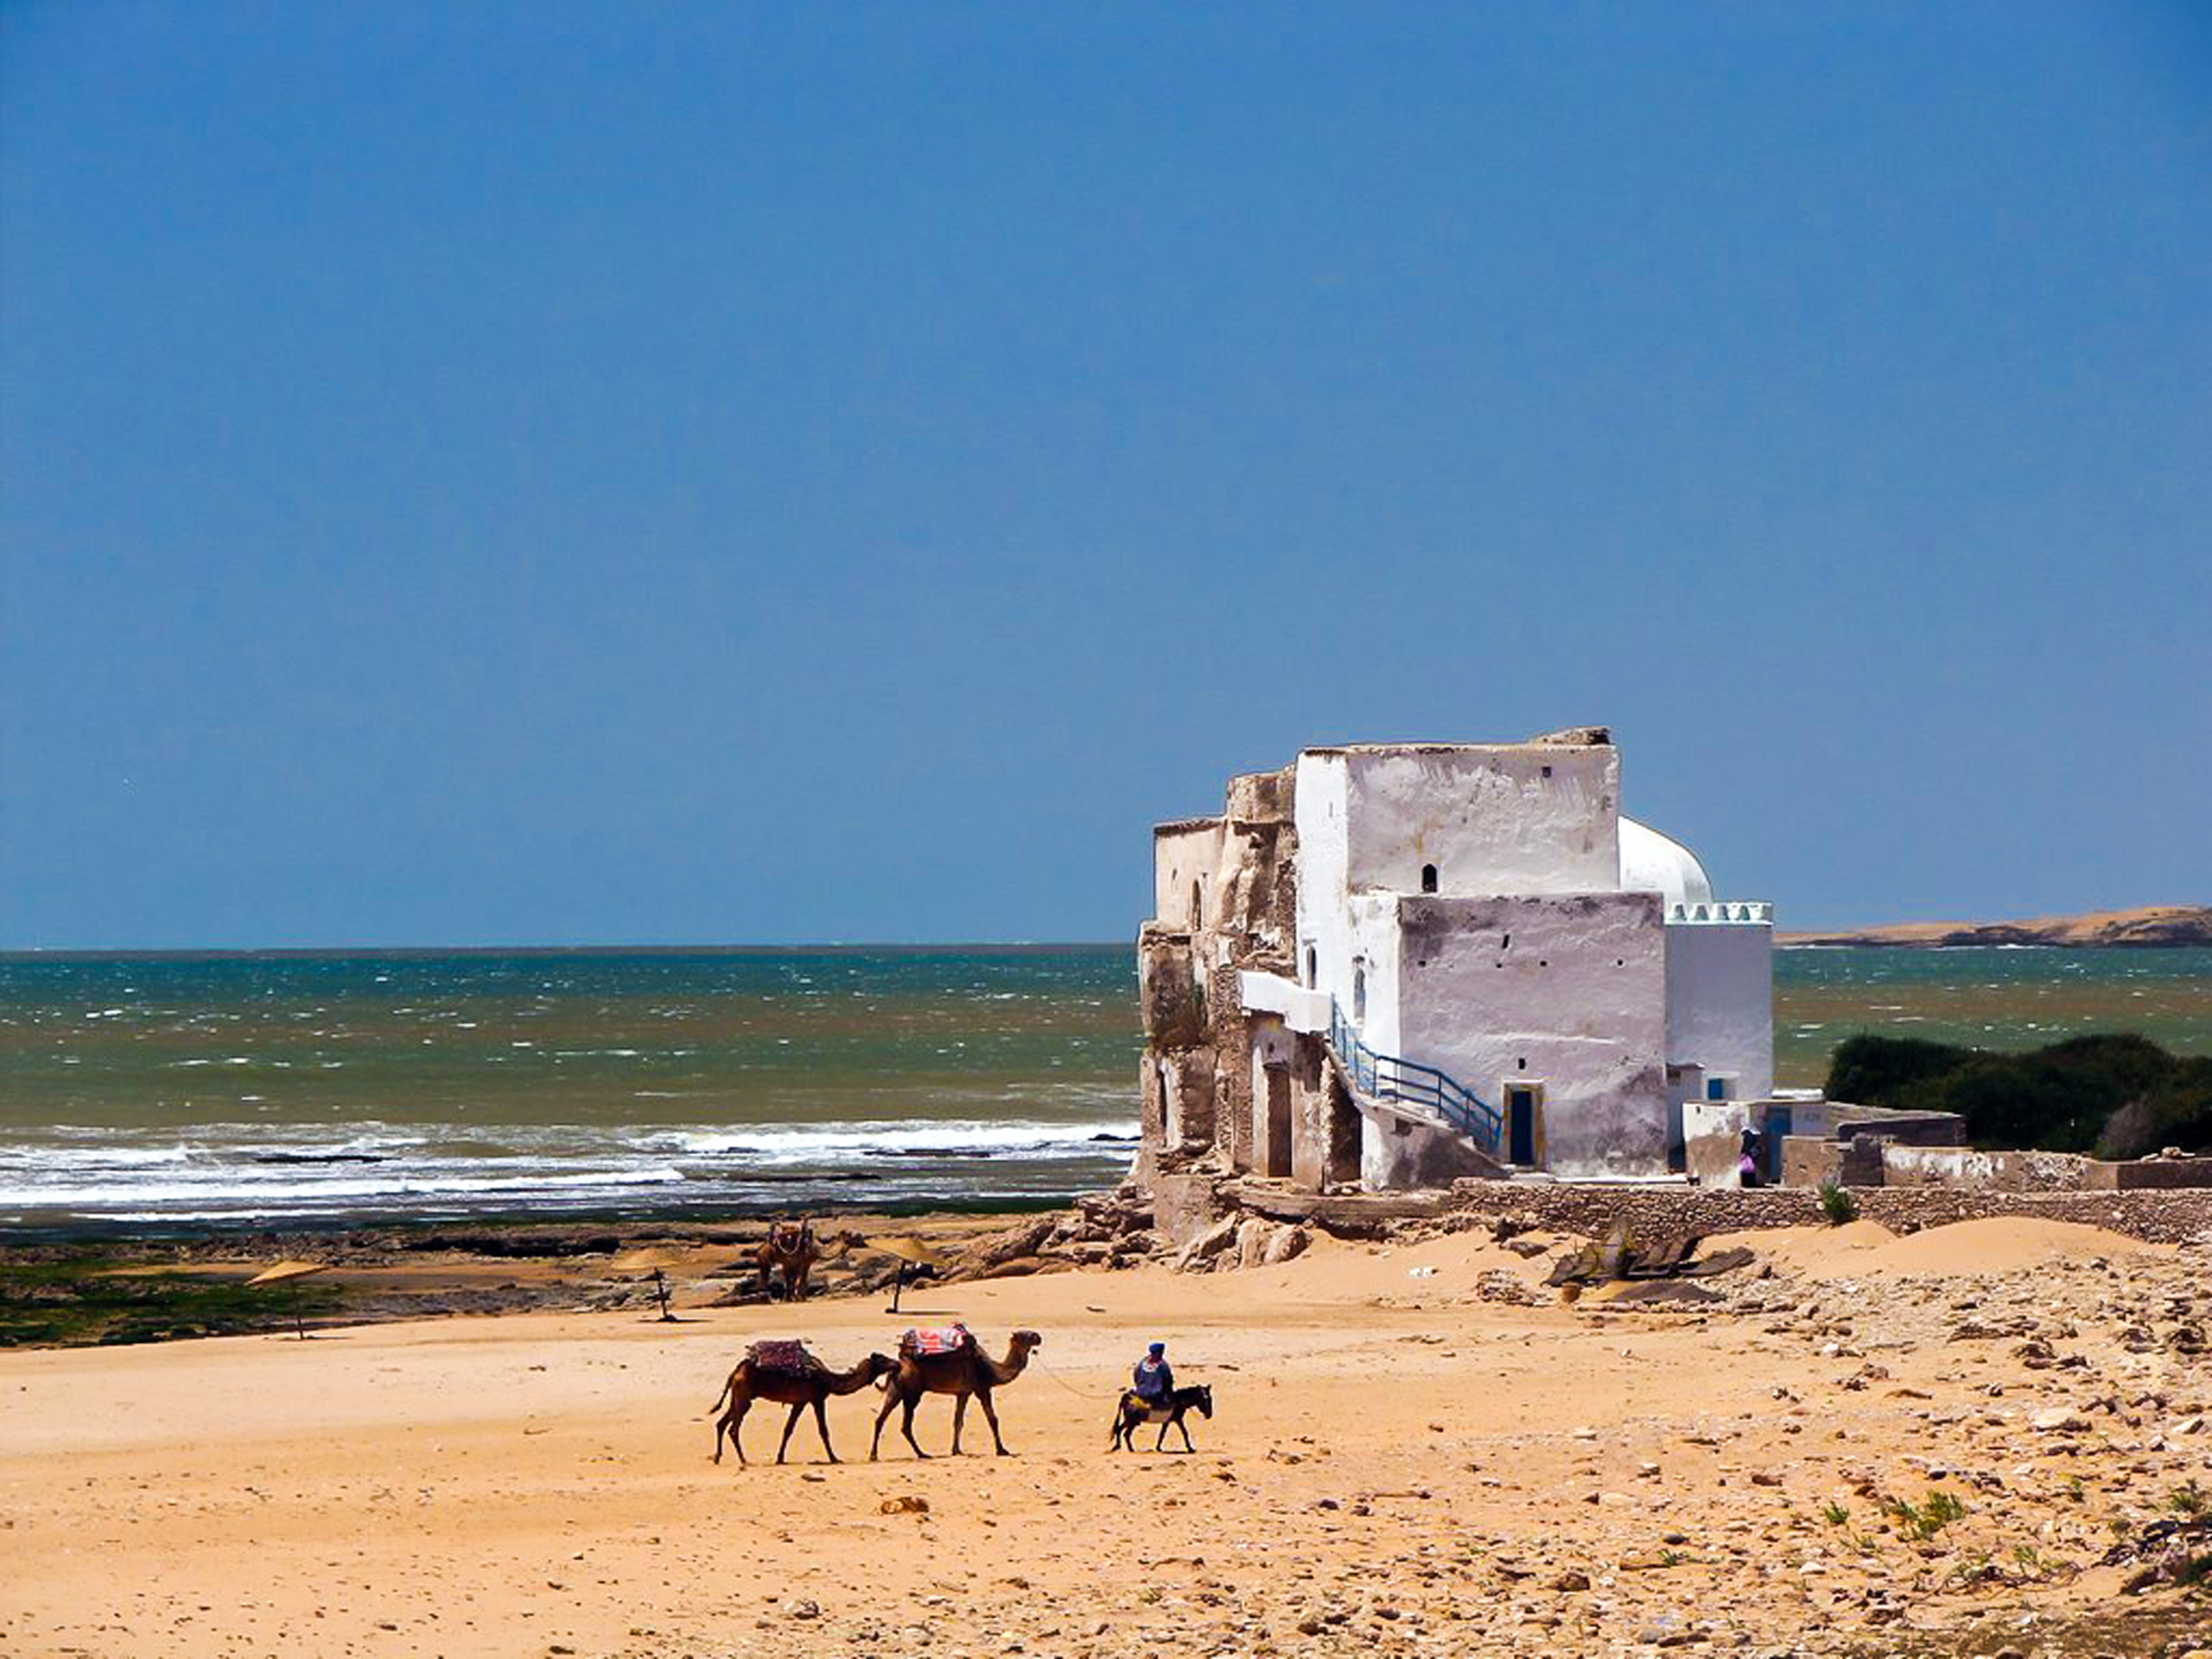 Camels on a coast